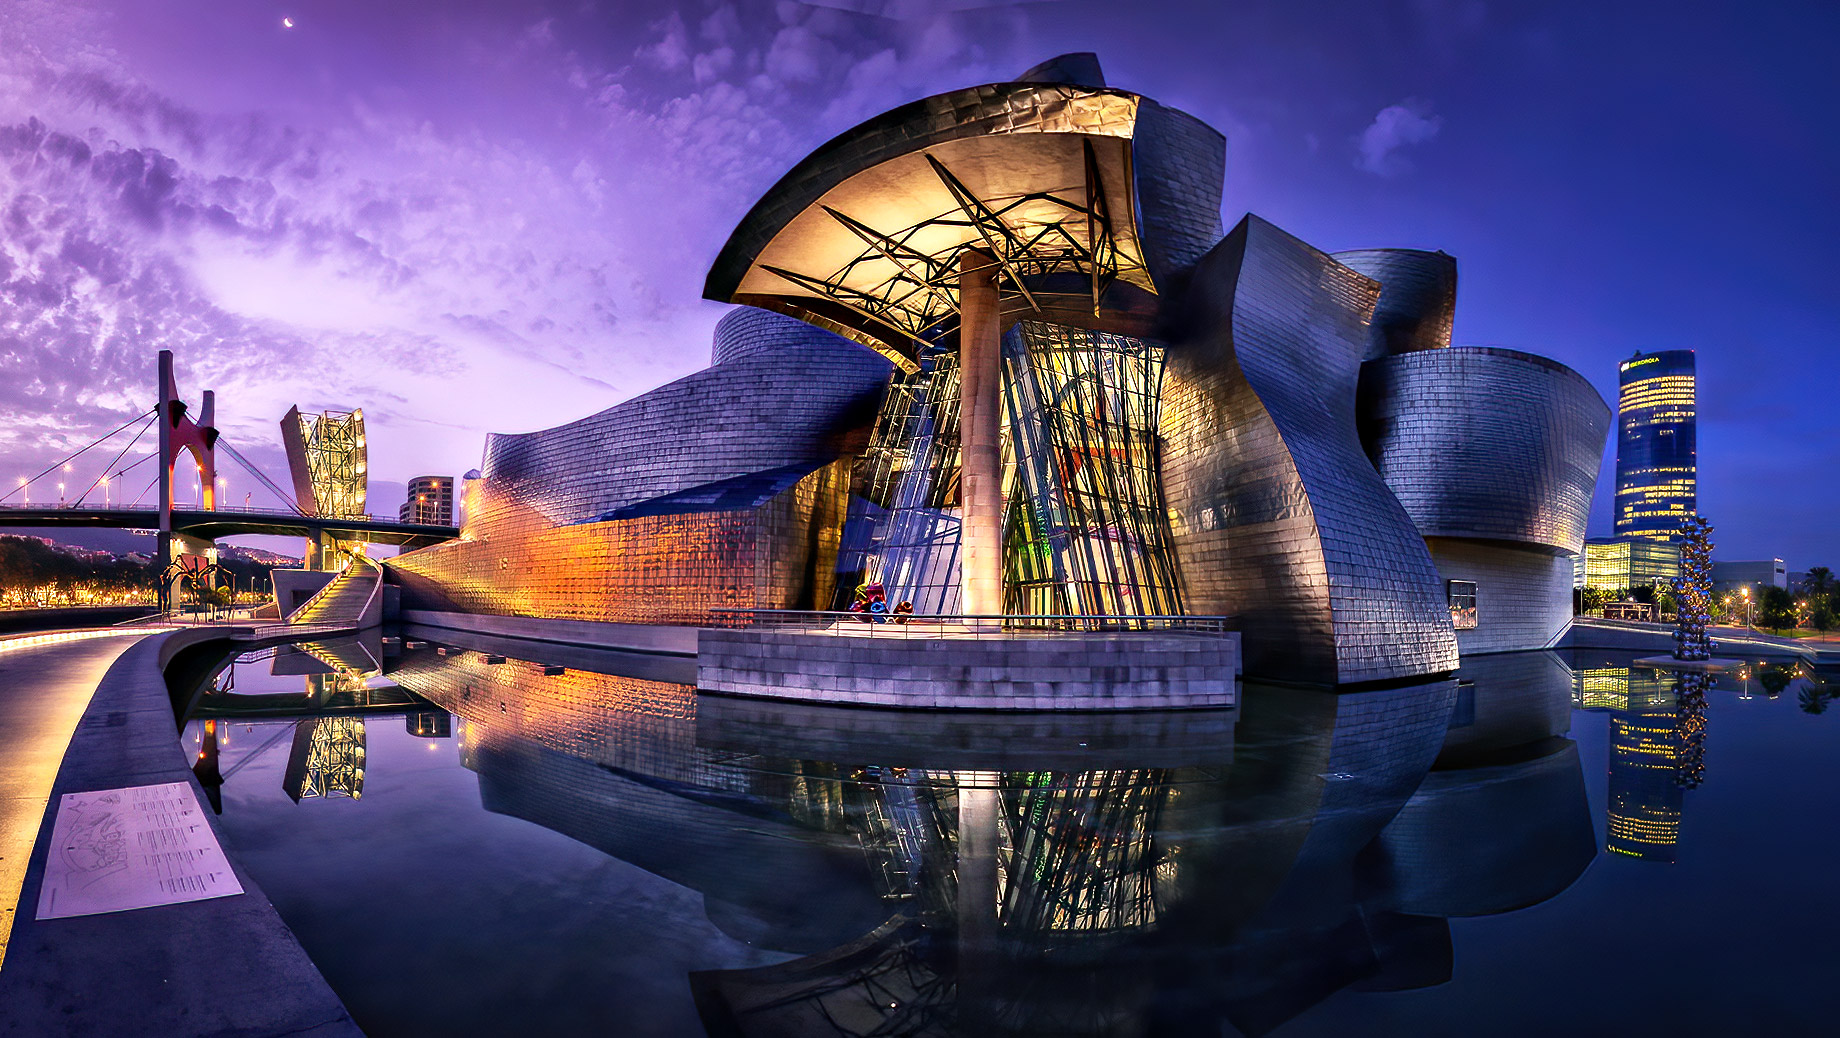 The Guggenheim Museum Bilbao - Abando, Bilbao, Spain